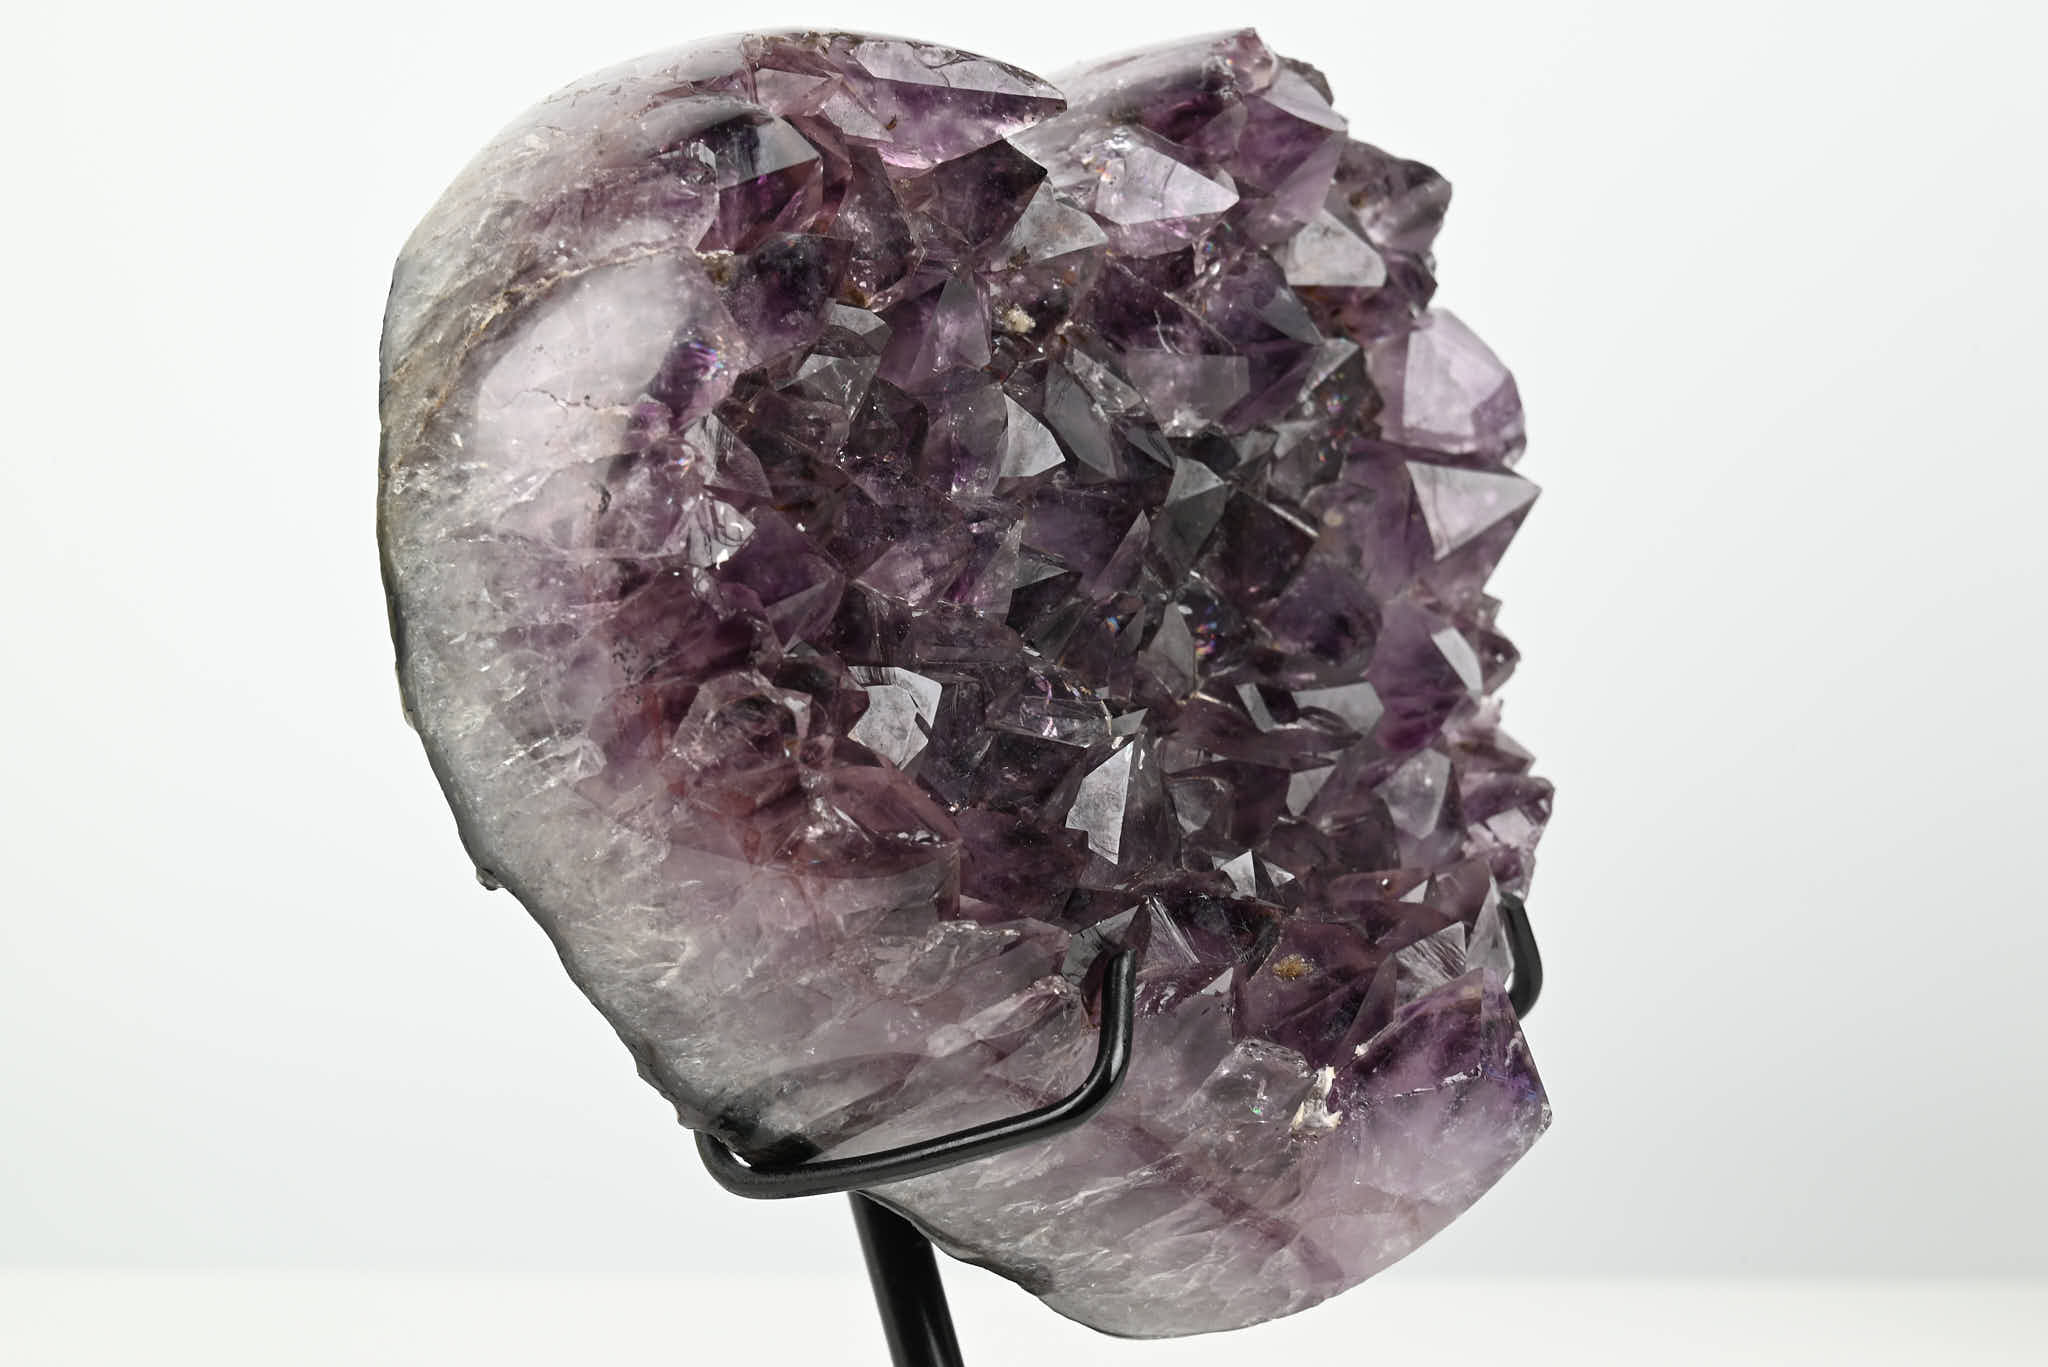 Extra Quality Amethyst Geode Heart - 1.17kg, 15cm high - #HTAMET-34004